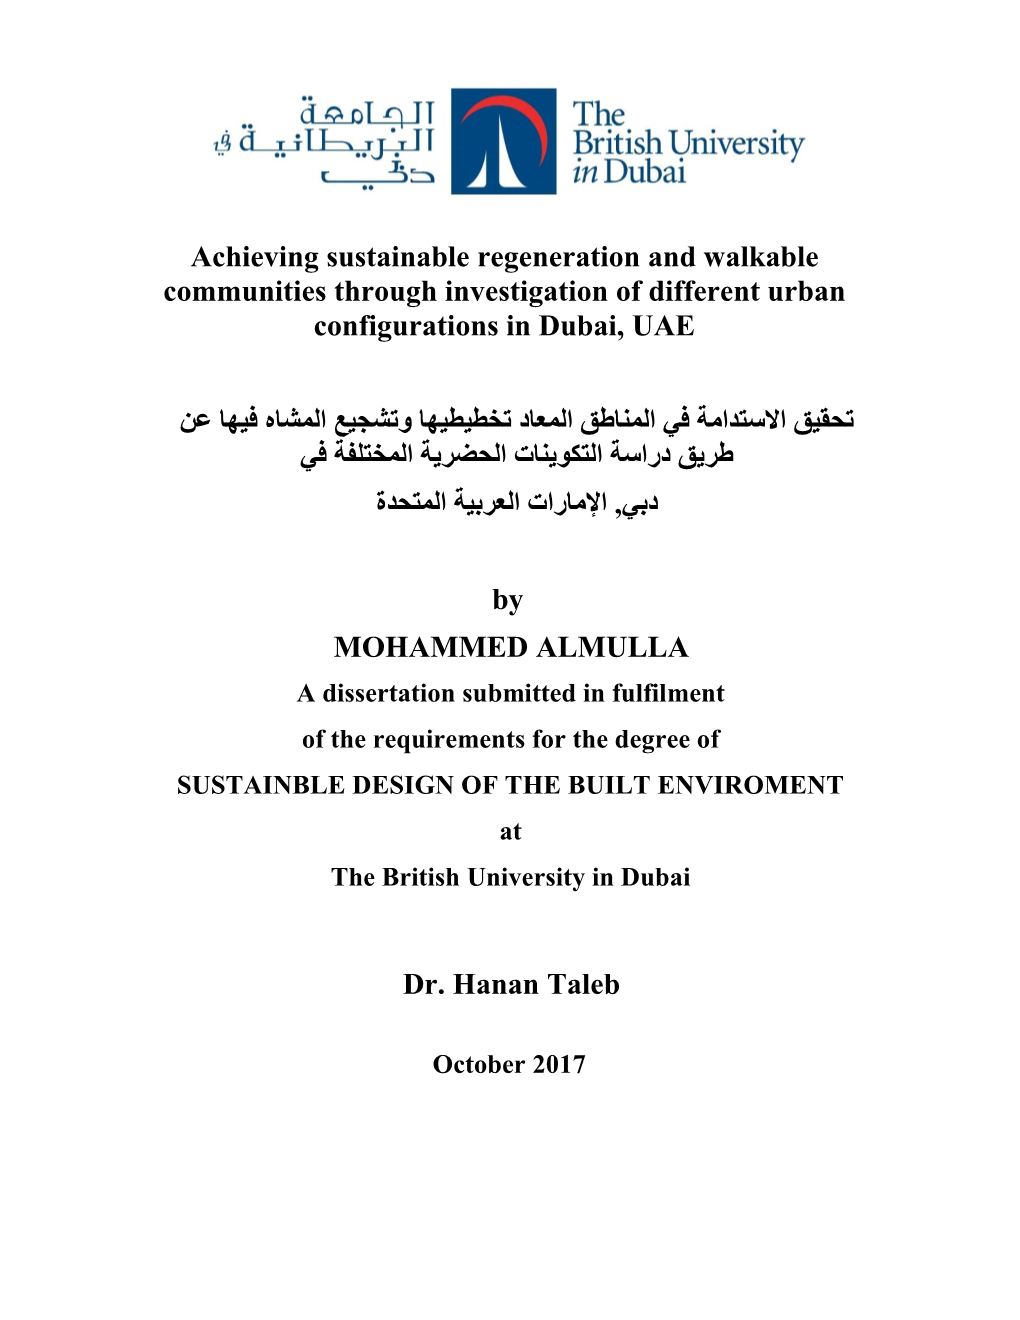 Achieving Sustainable Regeneration and Walkable Communities Through Investigation of Different Urban Configurations in Dubai, UAE